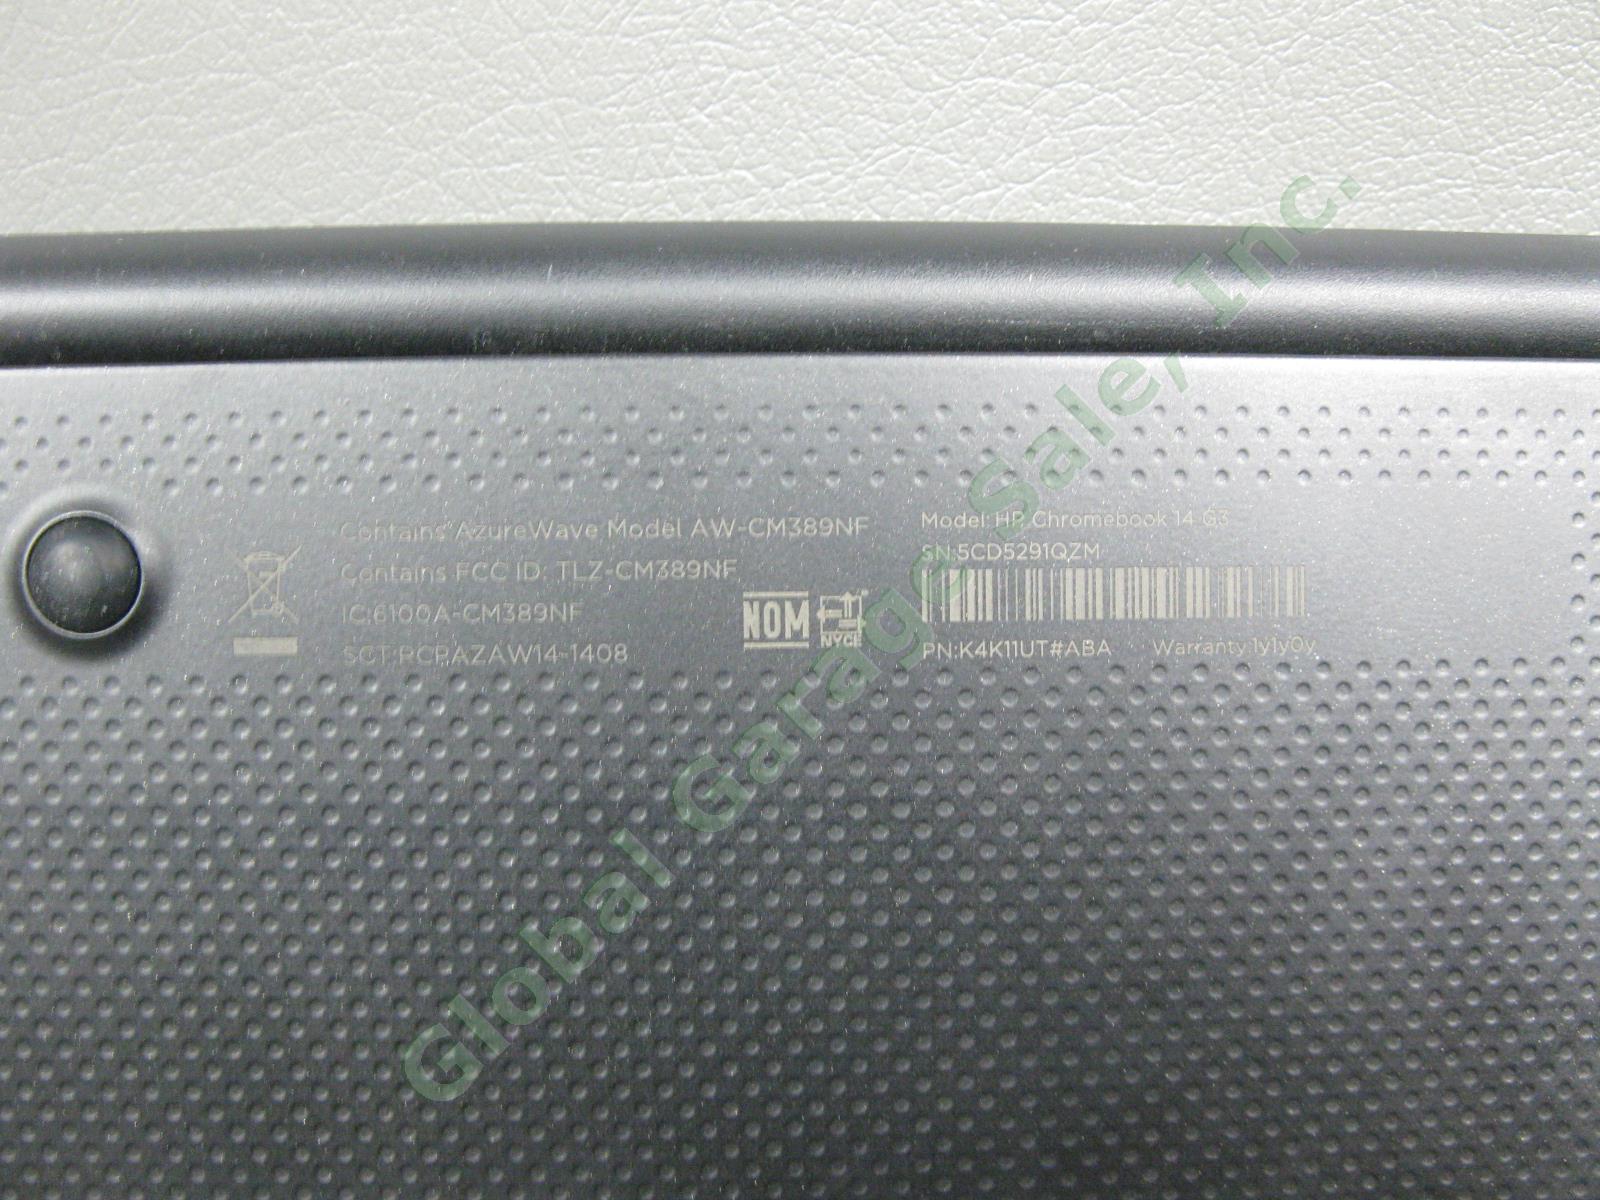 3 HP Chromebook 14 G3 Netbook Laptop Computer Lot 2.1GHz 4GB 16GB Power Supplies 8